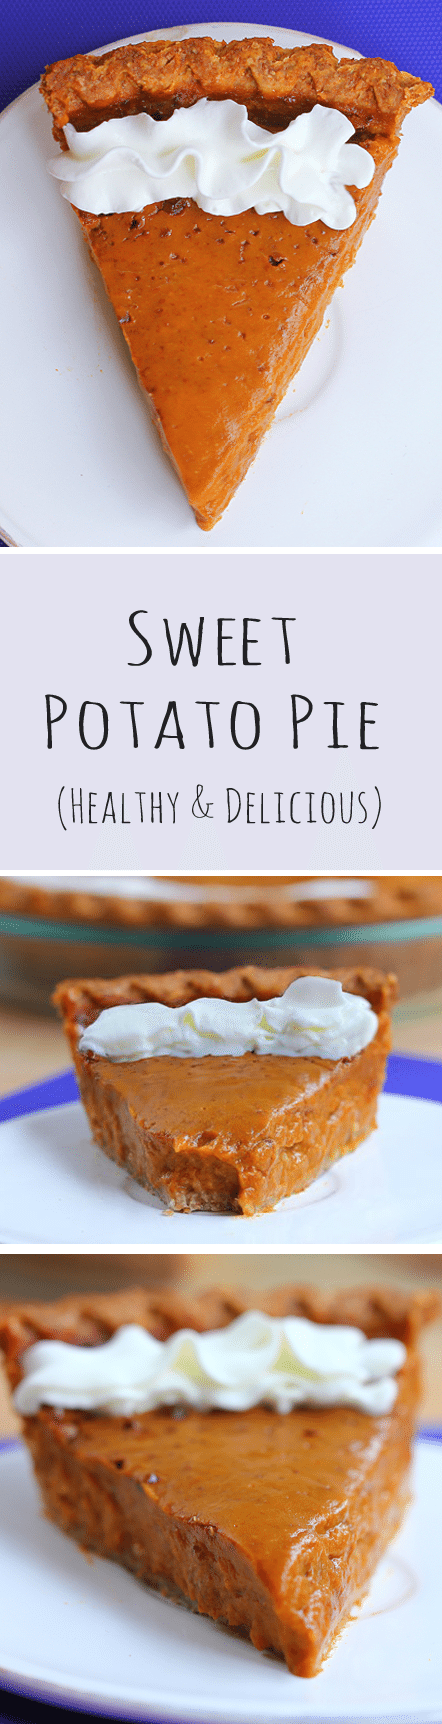 Ingredients: 2 large sweet potatoes, 1 tsp vanilla extract, 2 /2 tbsp... Full recipe: https://chocolatecoveredkatie.com/2015/11/16/healthy-sweet-potato-pie/